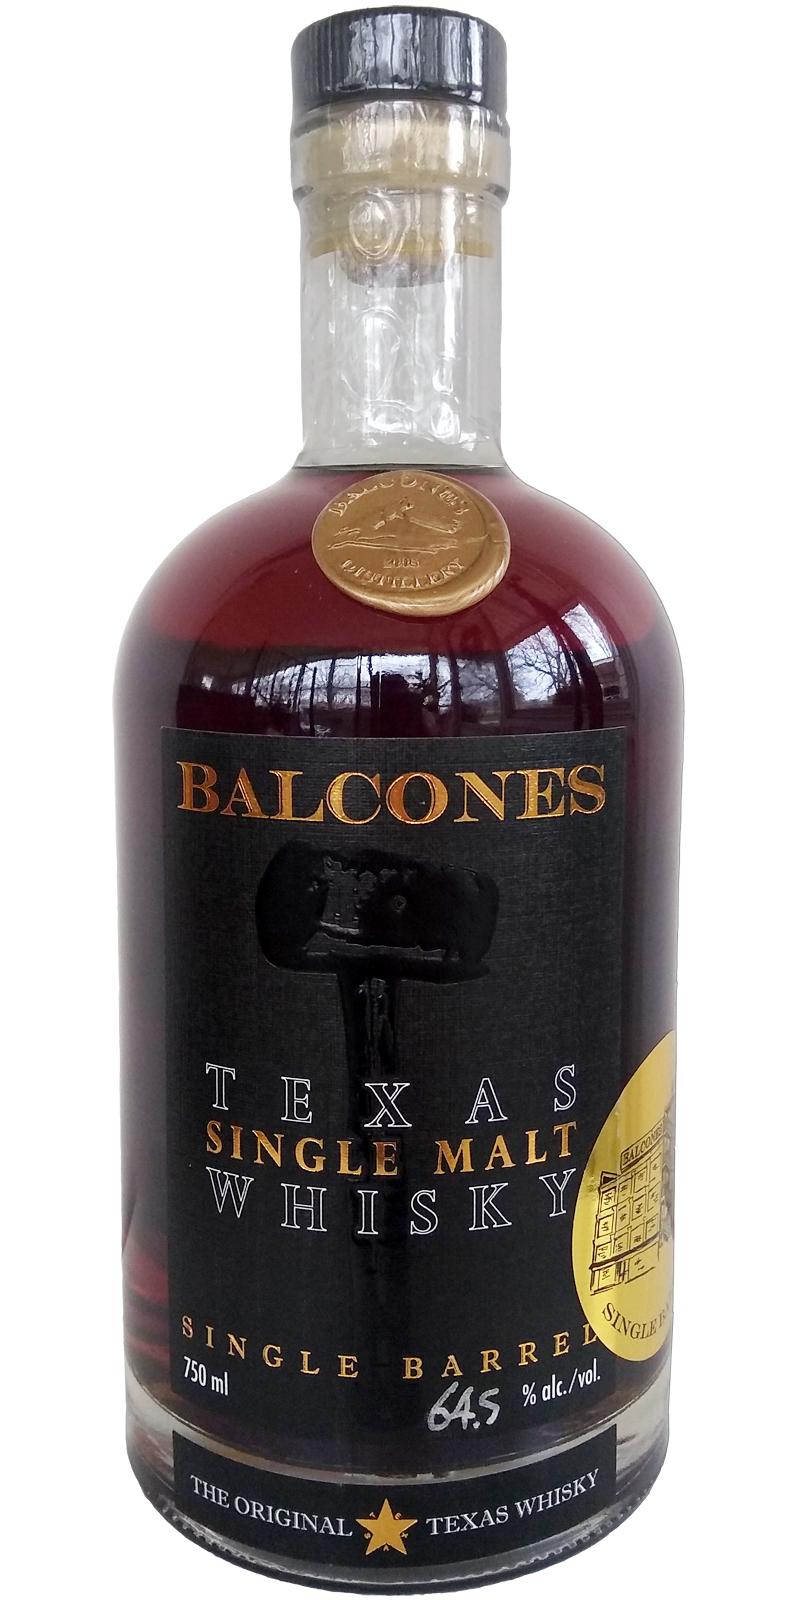 Balcones Texas Single Malt Whisky Single Barrel American Oak #2420 64.5% 750ml